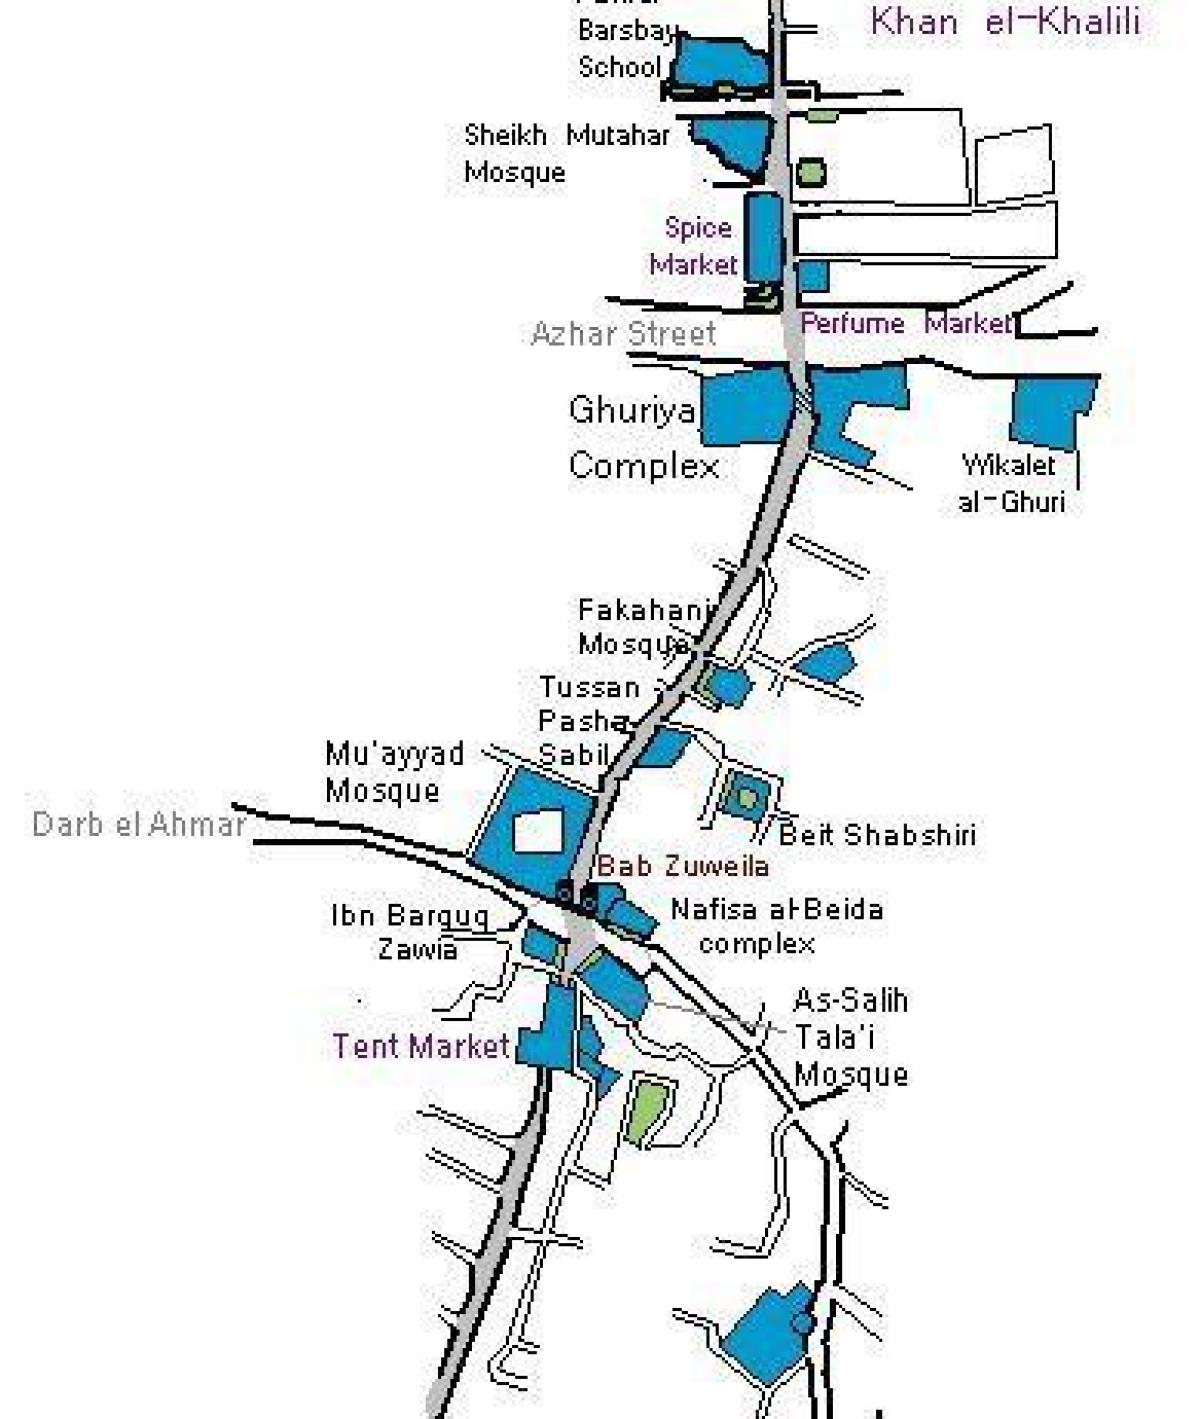 khan เอล khalili bazaar แผนที่